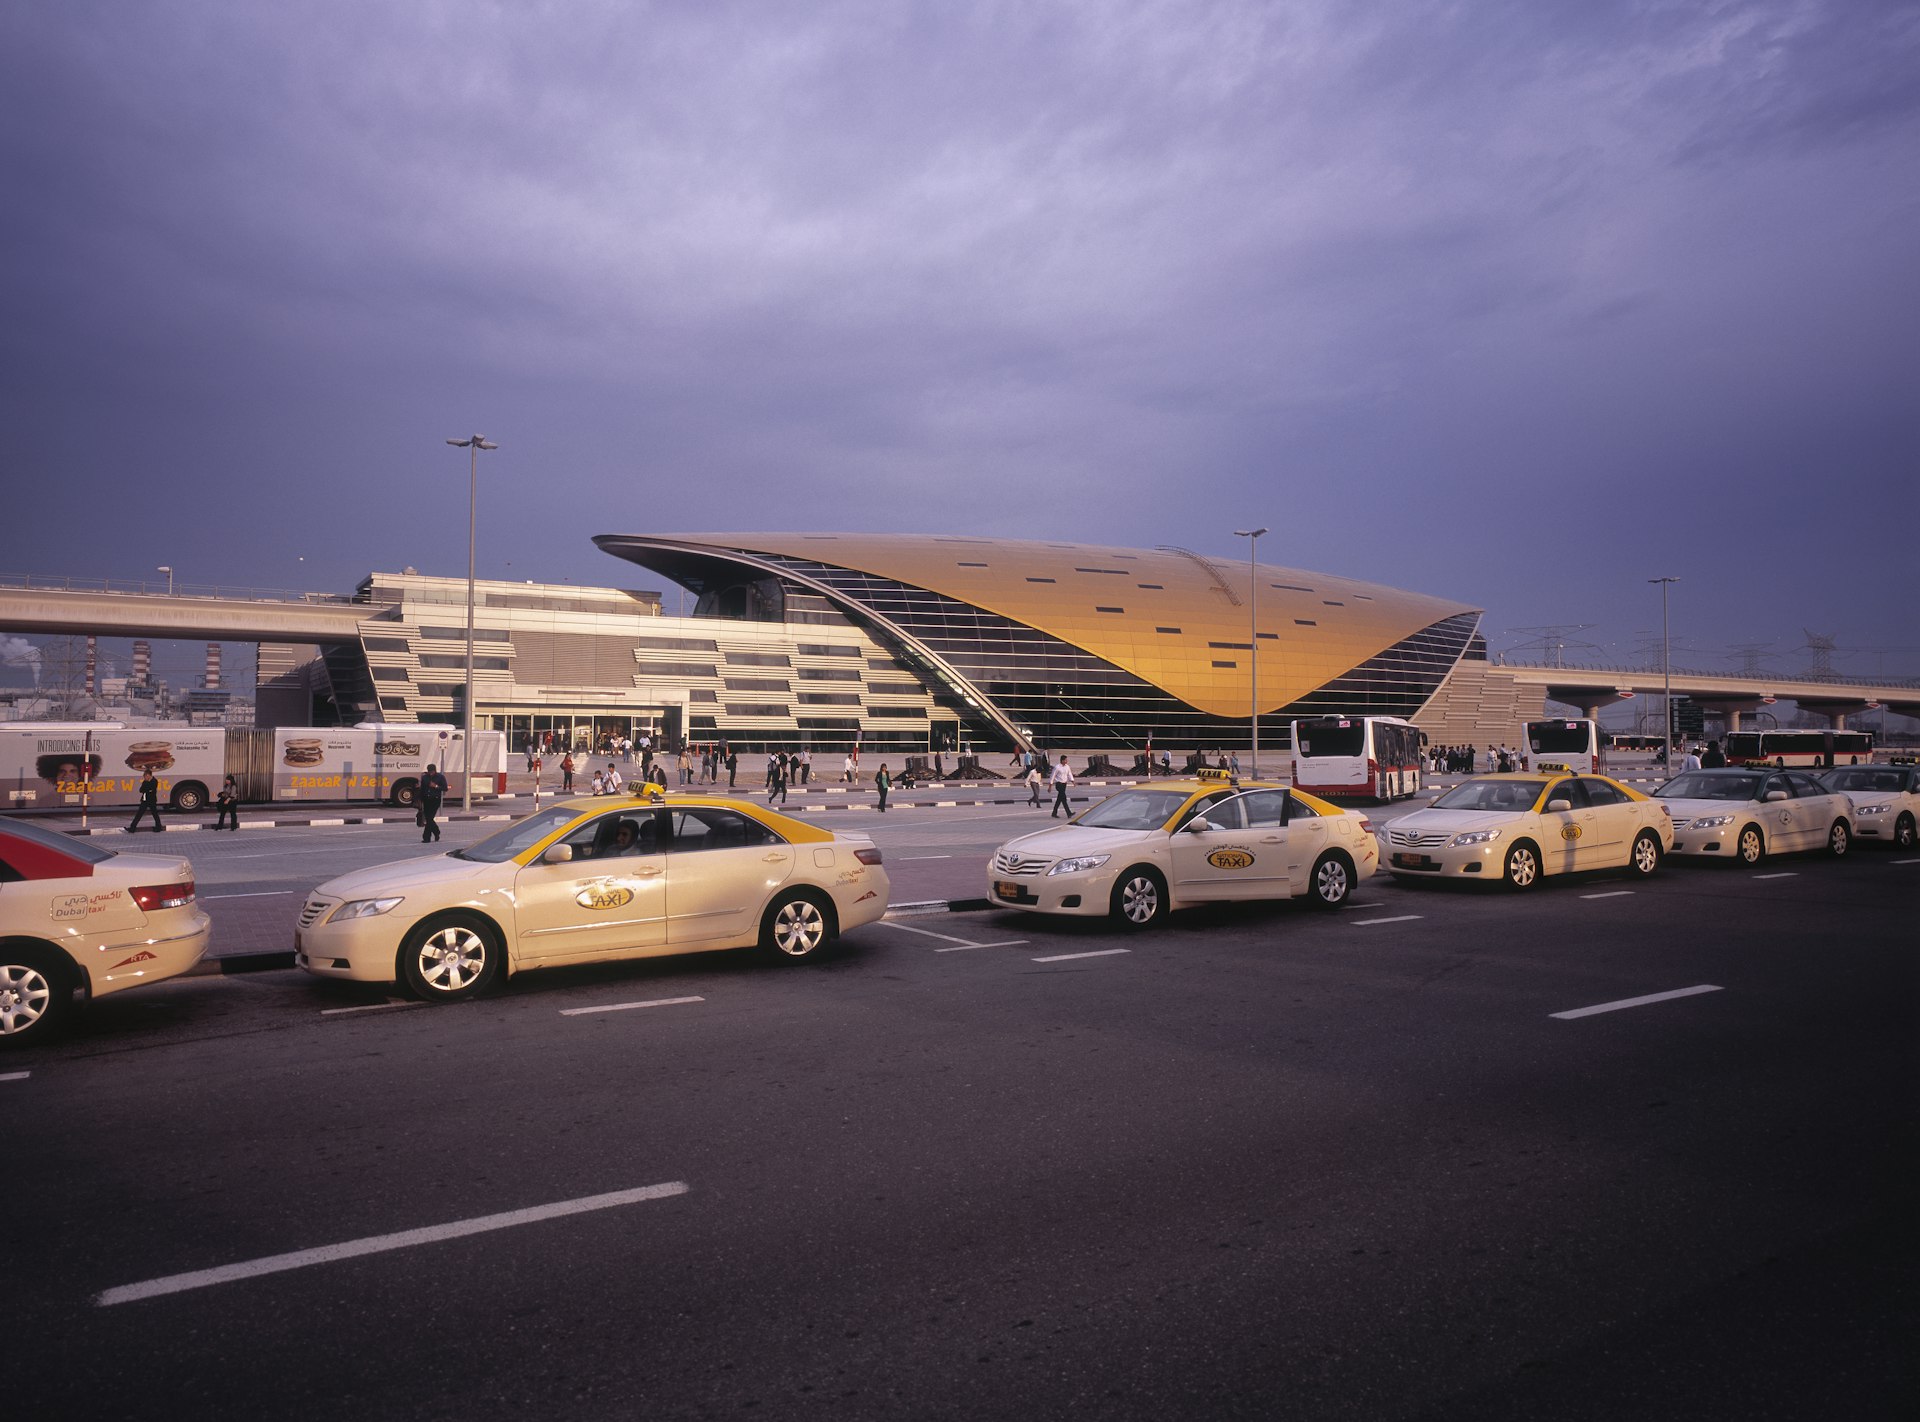 Taxi cabs waiting at a futuristic metro stop in Dubai